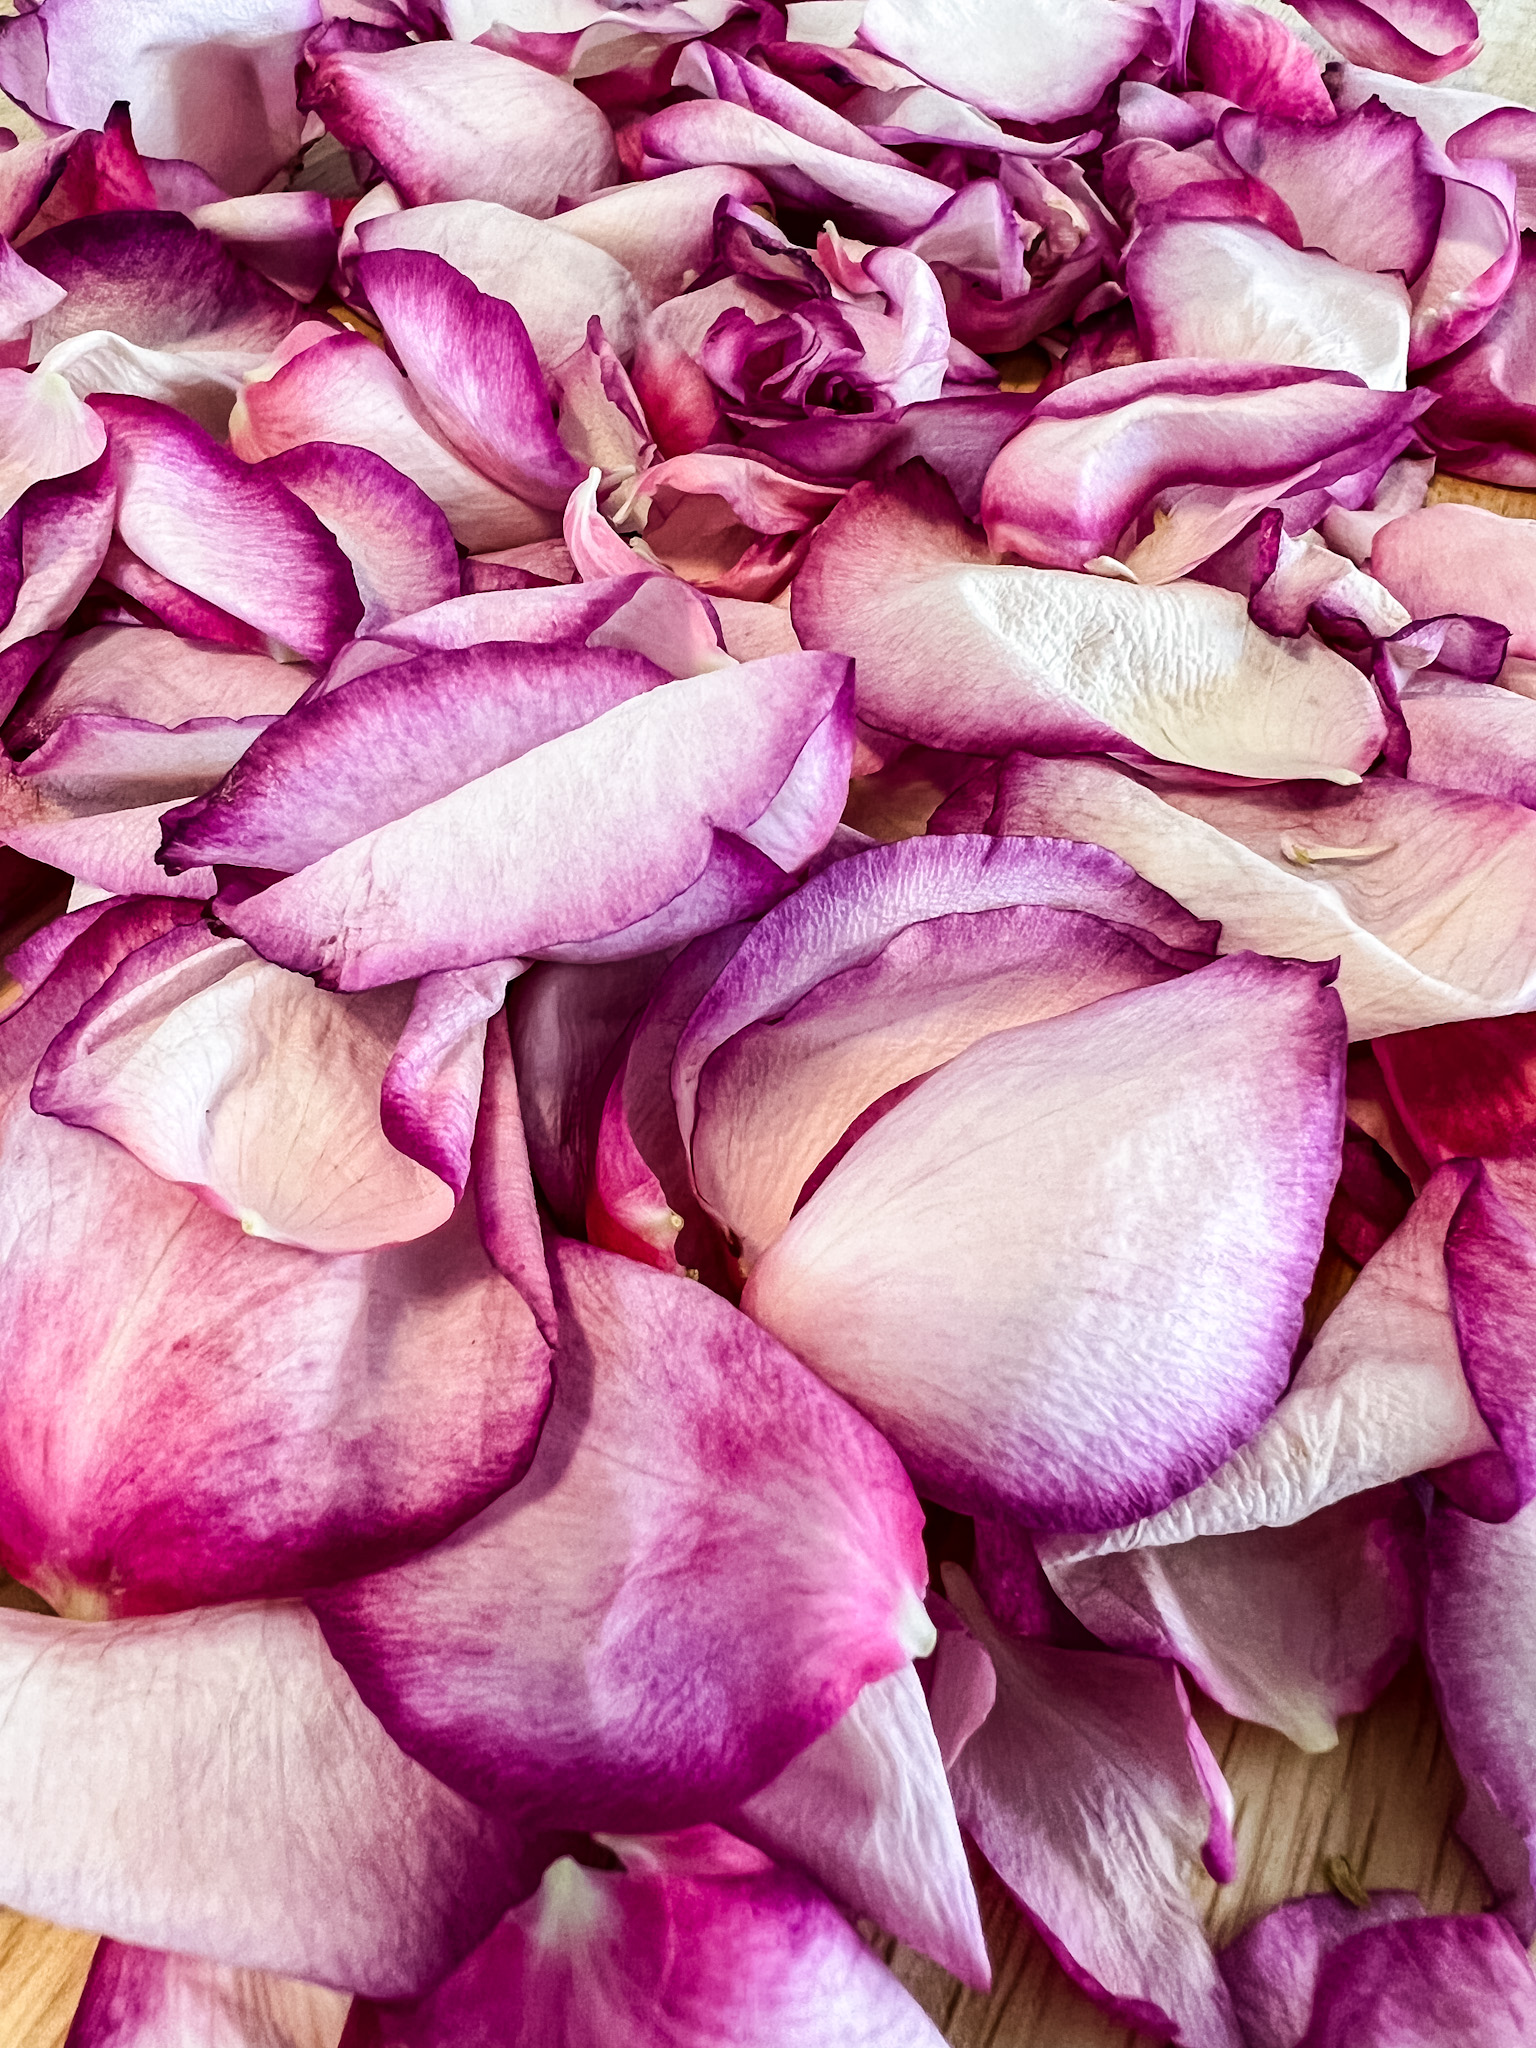 Drying Rose Petals  Natural body care recipes, Dried rose petals, Body  care recipes